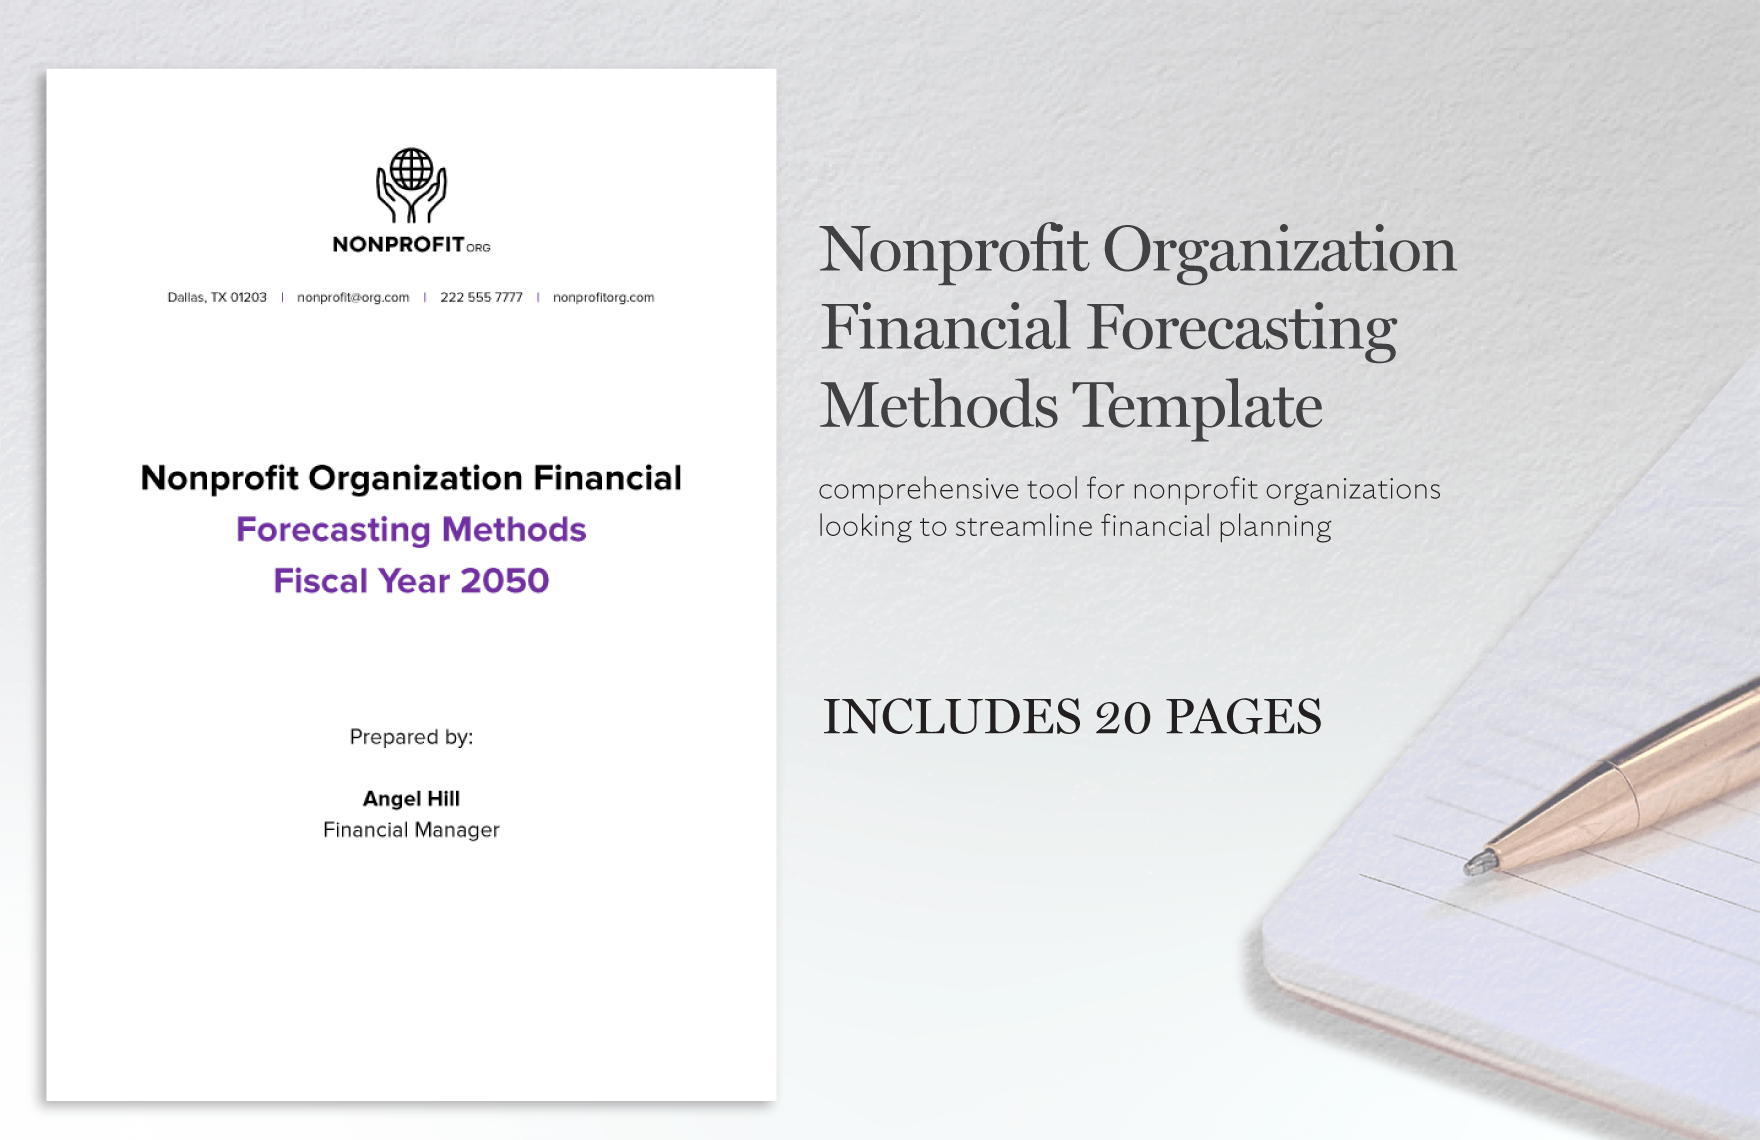 Nonprofit Organization Financial Forecasting Methods Template in Word, Google Docs, PDF